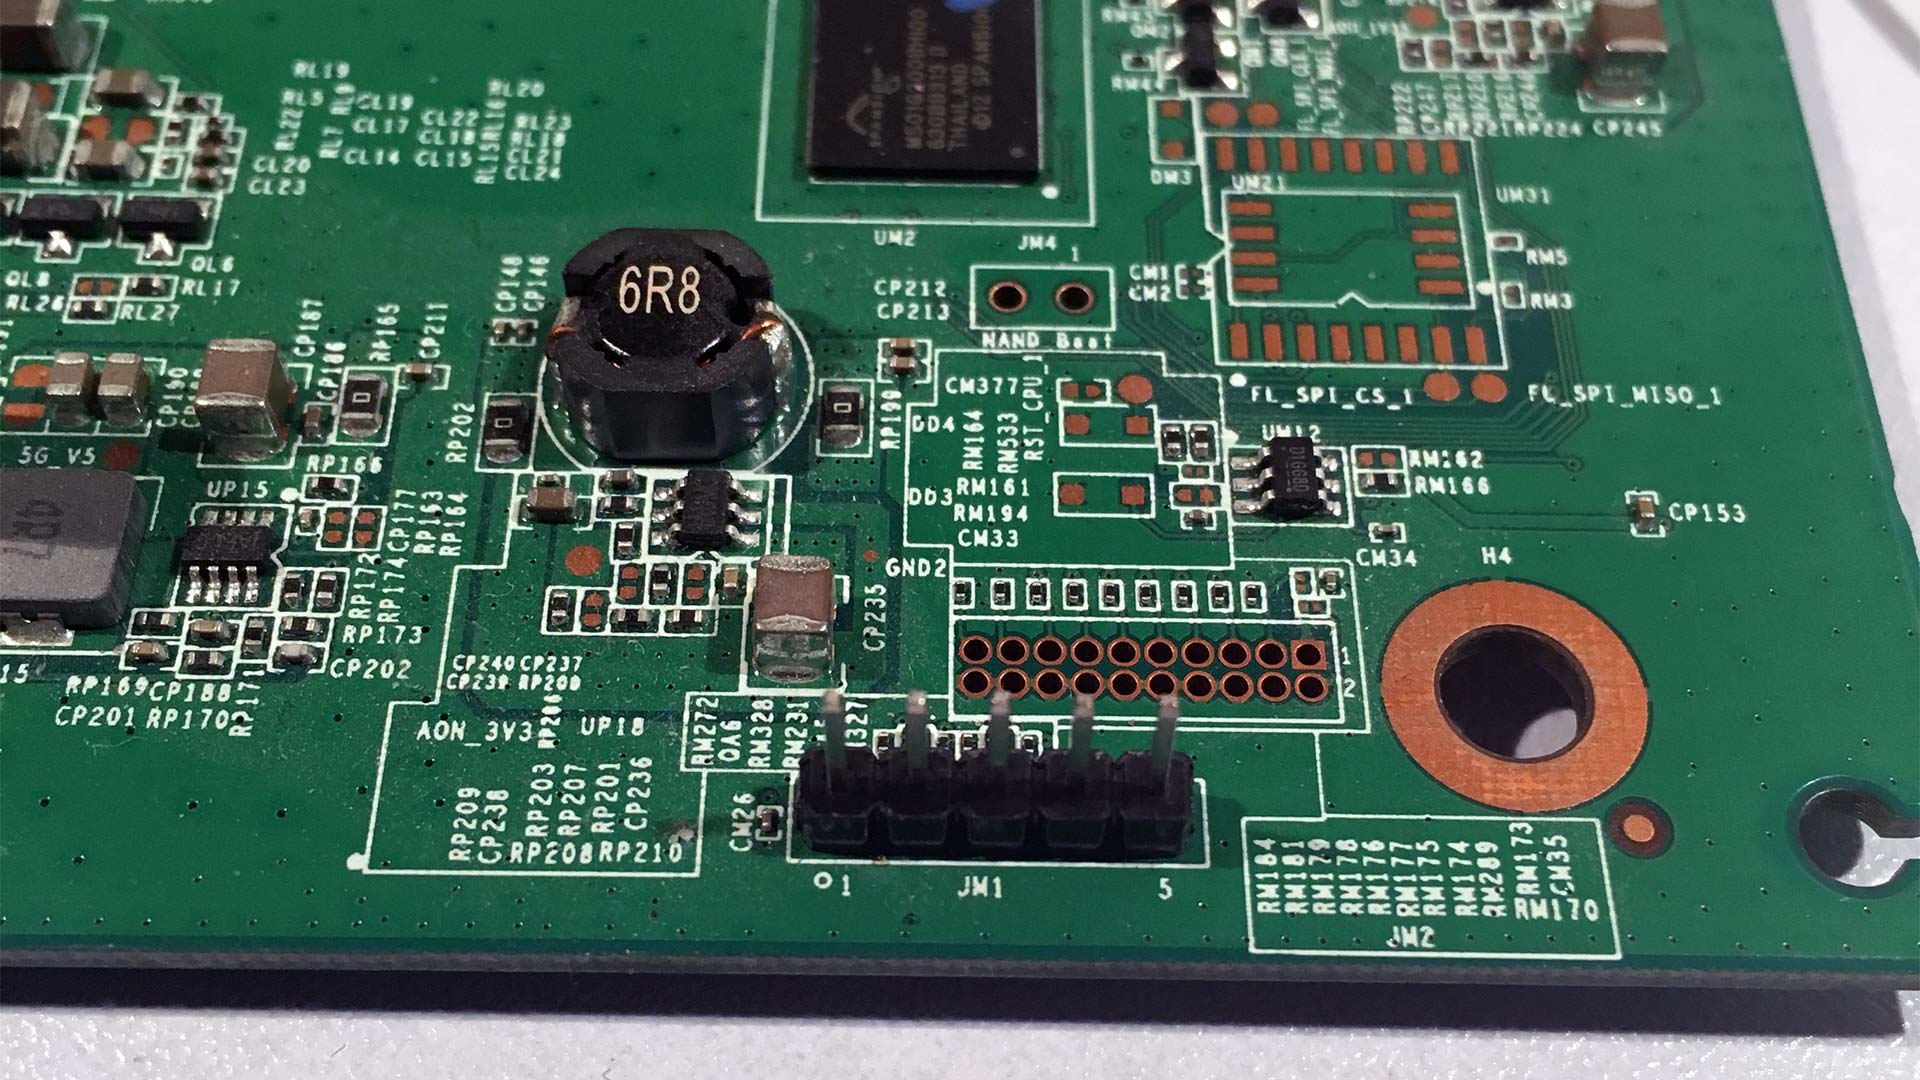 Linksys E8500 - header pins soldered on JM1